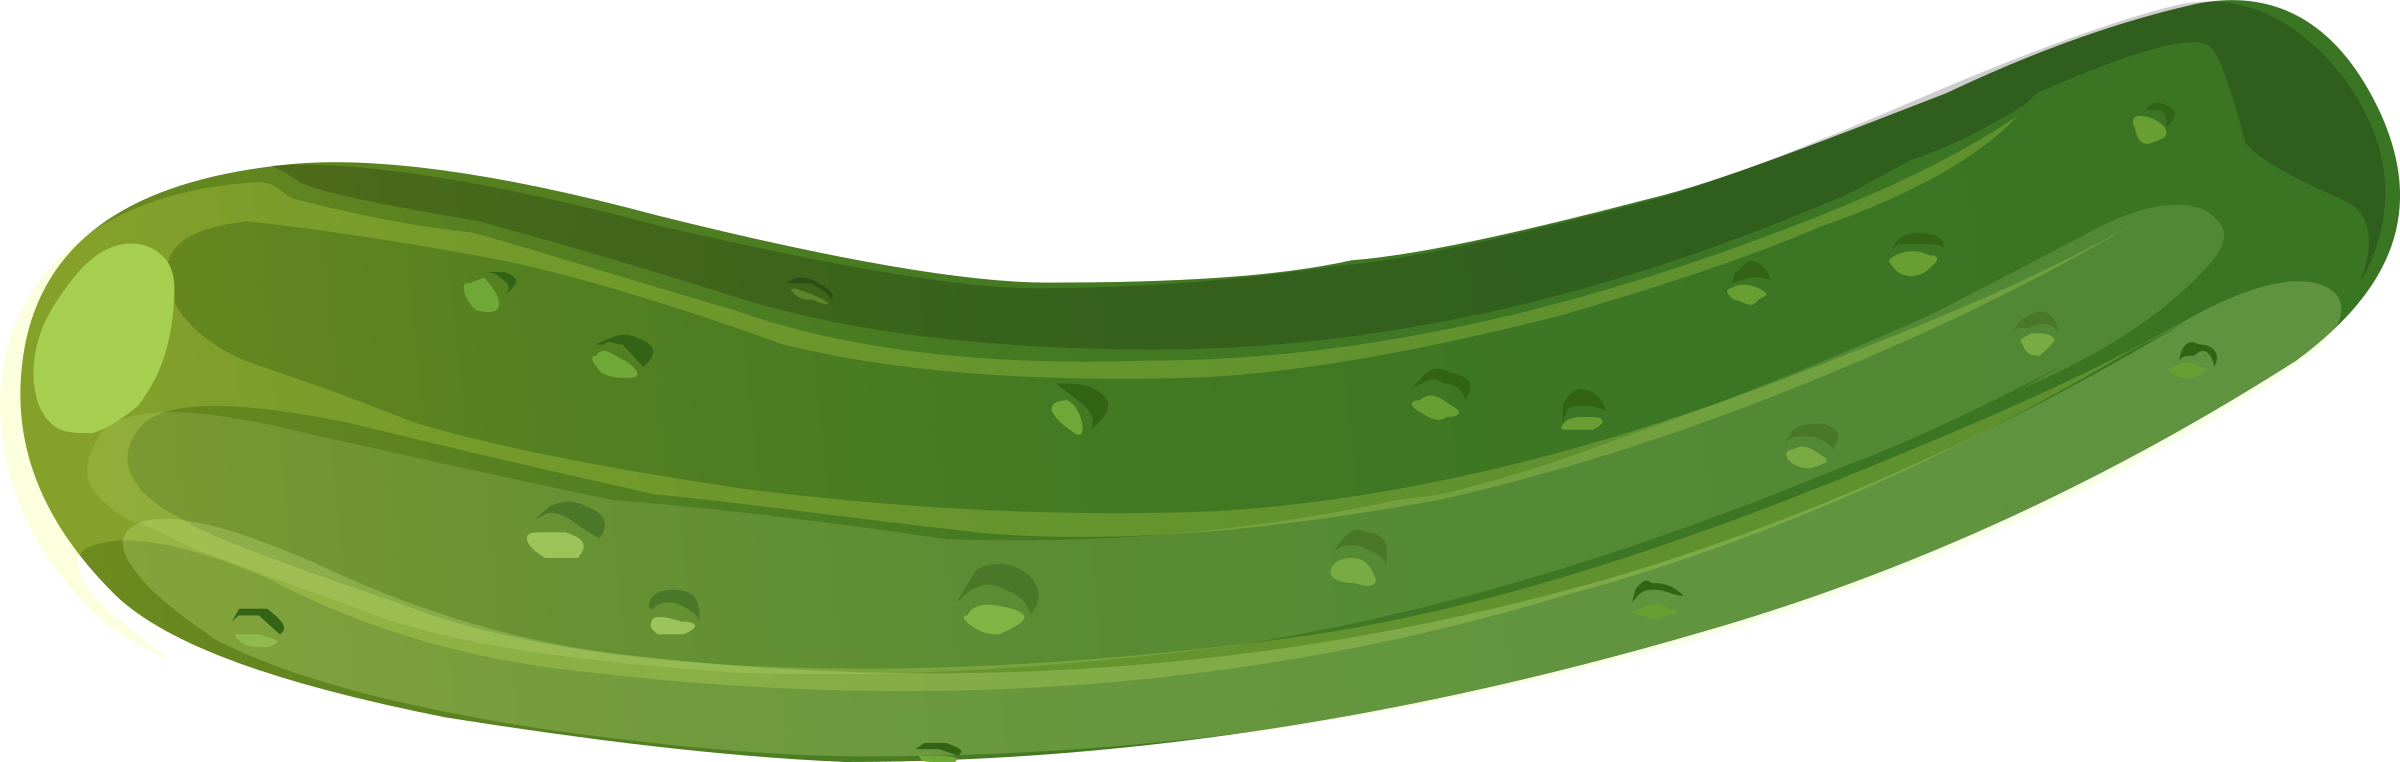 Green Zucchini Cartoon Illustration PNG